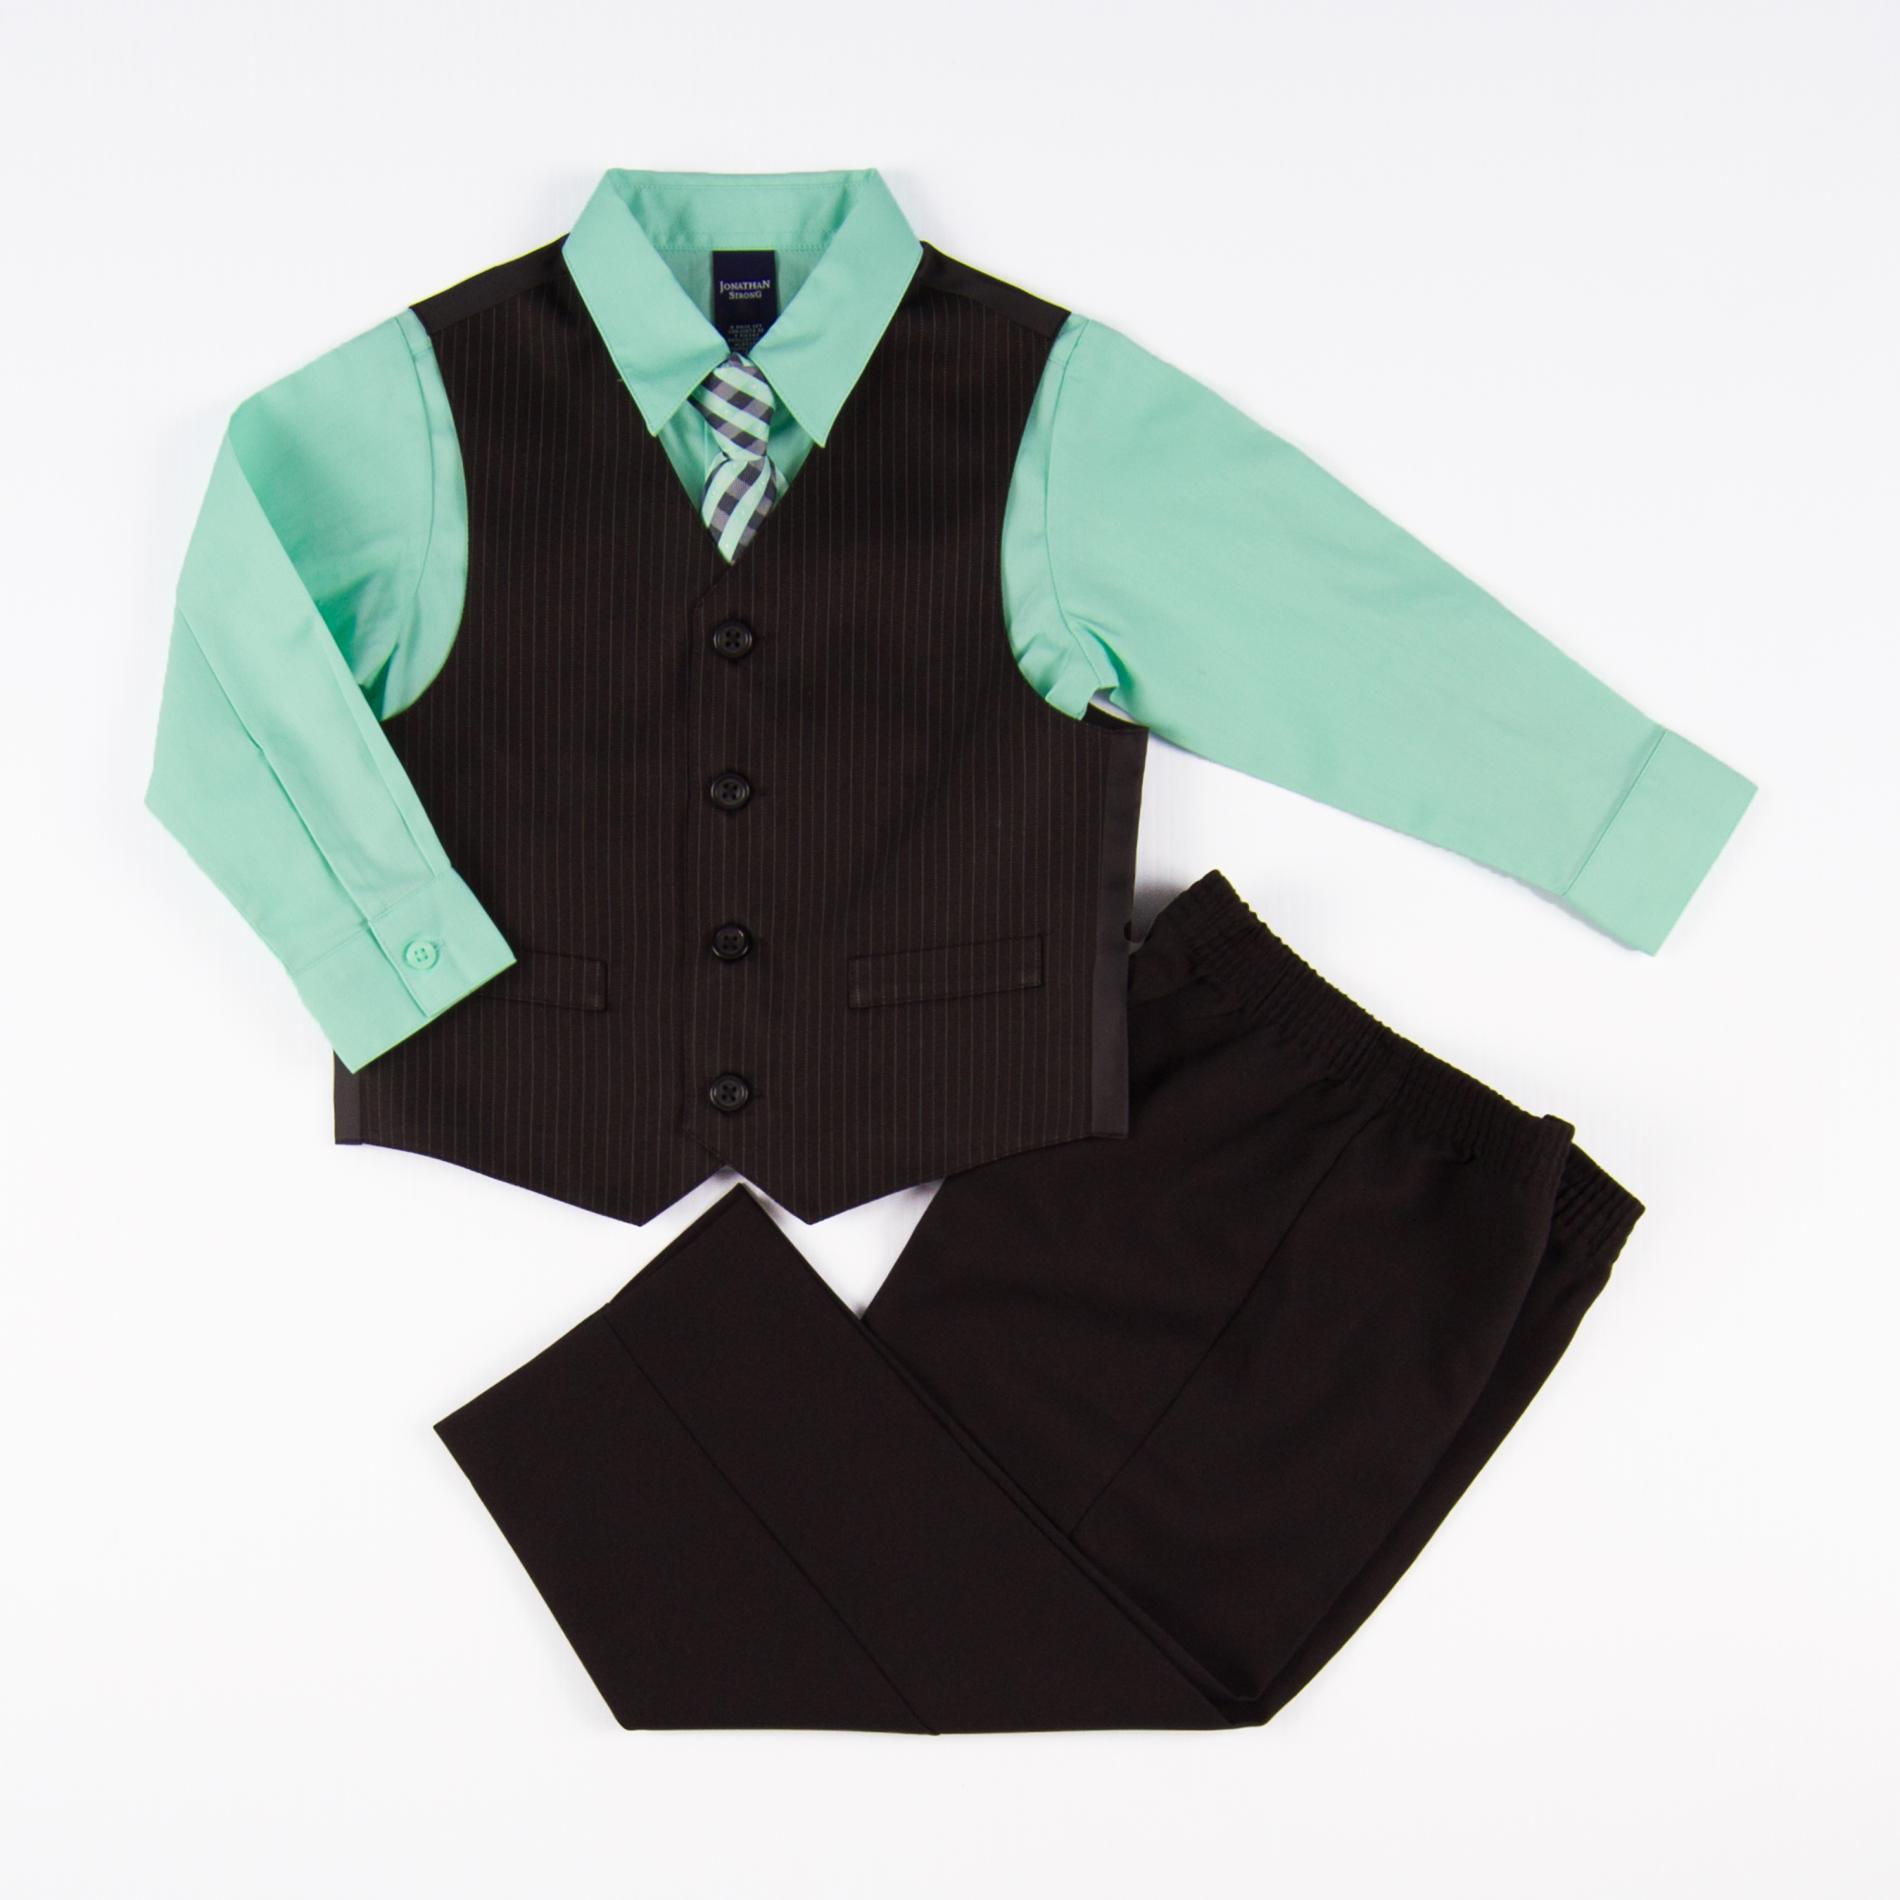 Jonathan Strong Infant & Toddler Boy's Shirt  Vest  Tie & Pants - Pinstripe